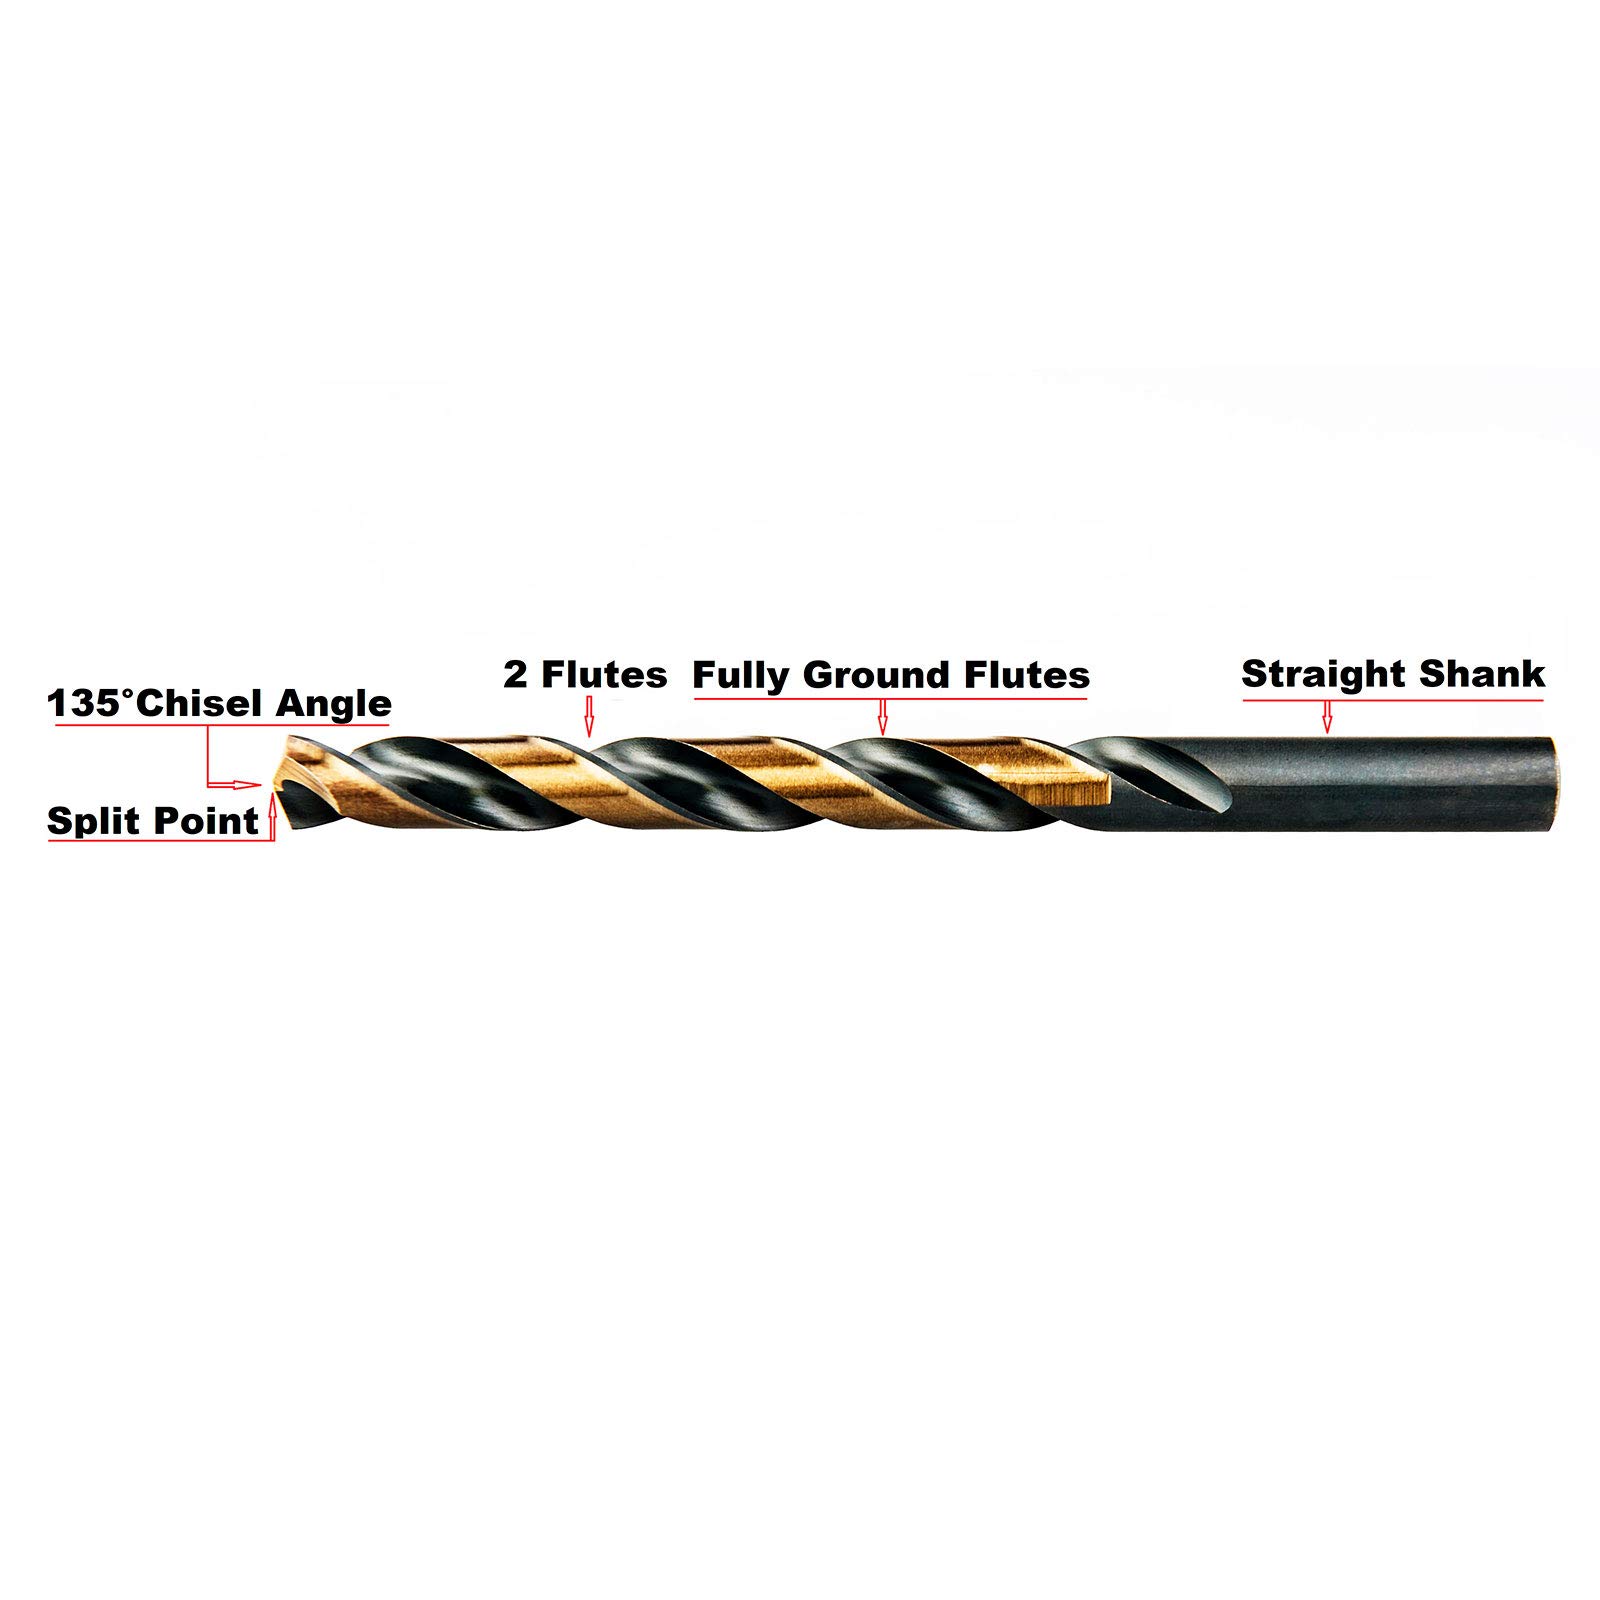 MAXTOOL 5/64" 10pcs Identical Jobber Length Drills HSS M2 Twist Drill Bits Fully Ground Black & Bronze Straight Shank Drills; JBF02H10R05P10